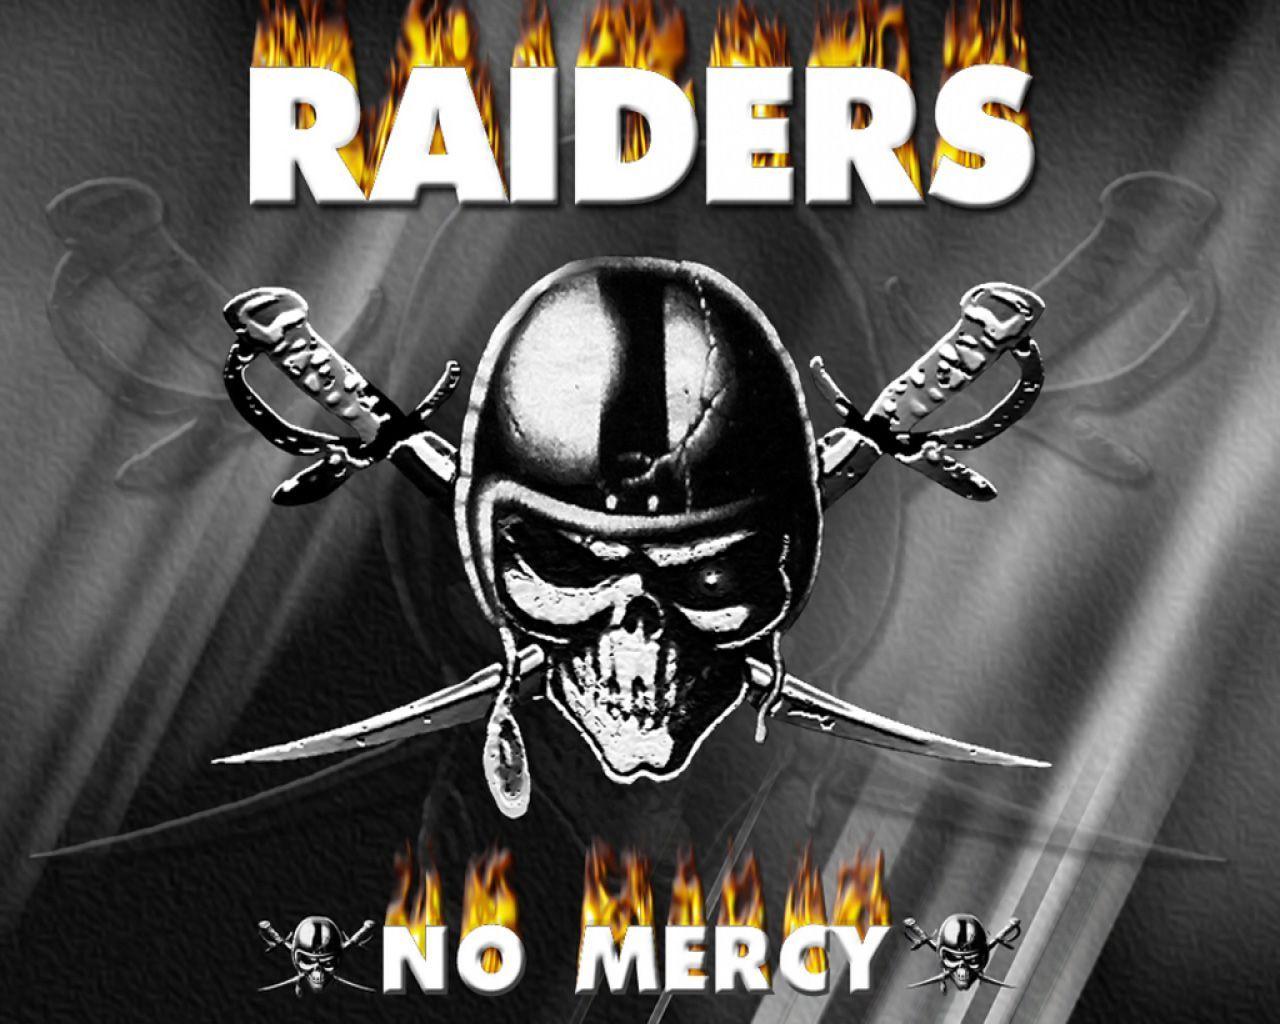 Oakland Raiders No Mercy ?w=1280 (1280×1024). Radiers